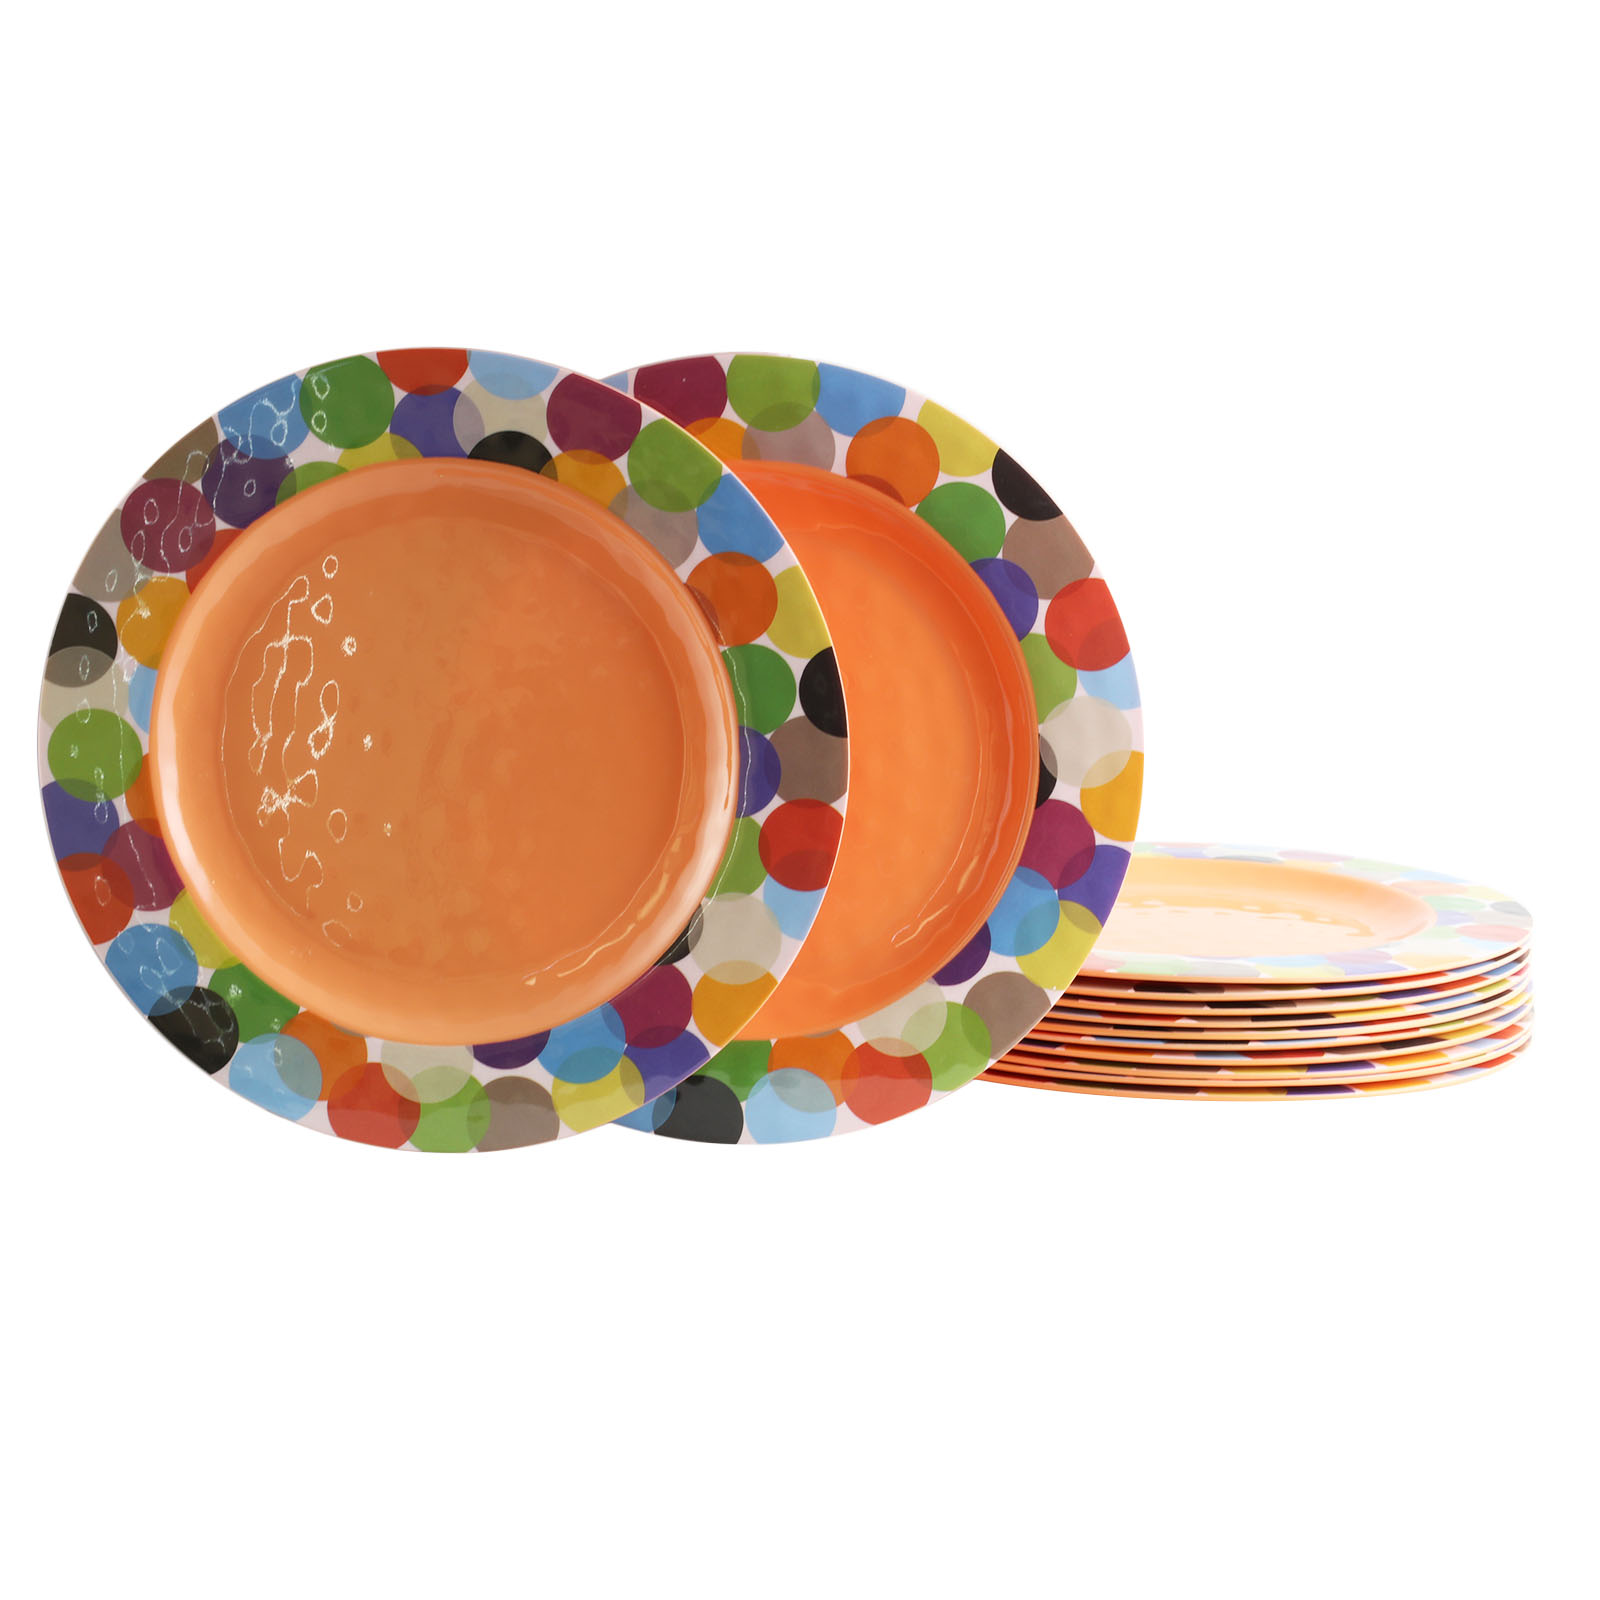 Studio California Party Circles 12 Piece 11 inch Melamine Dinner Plate Set in Orange